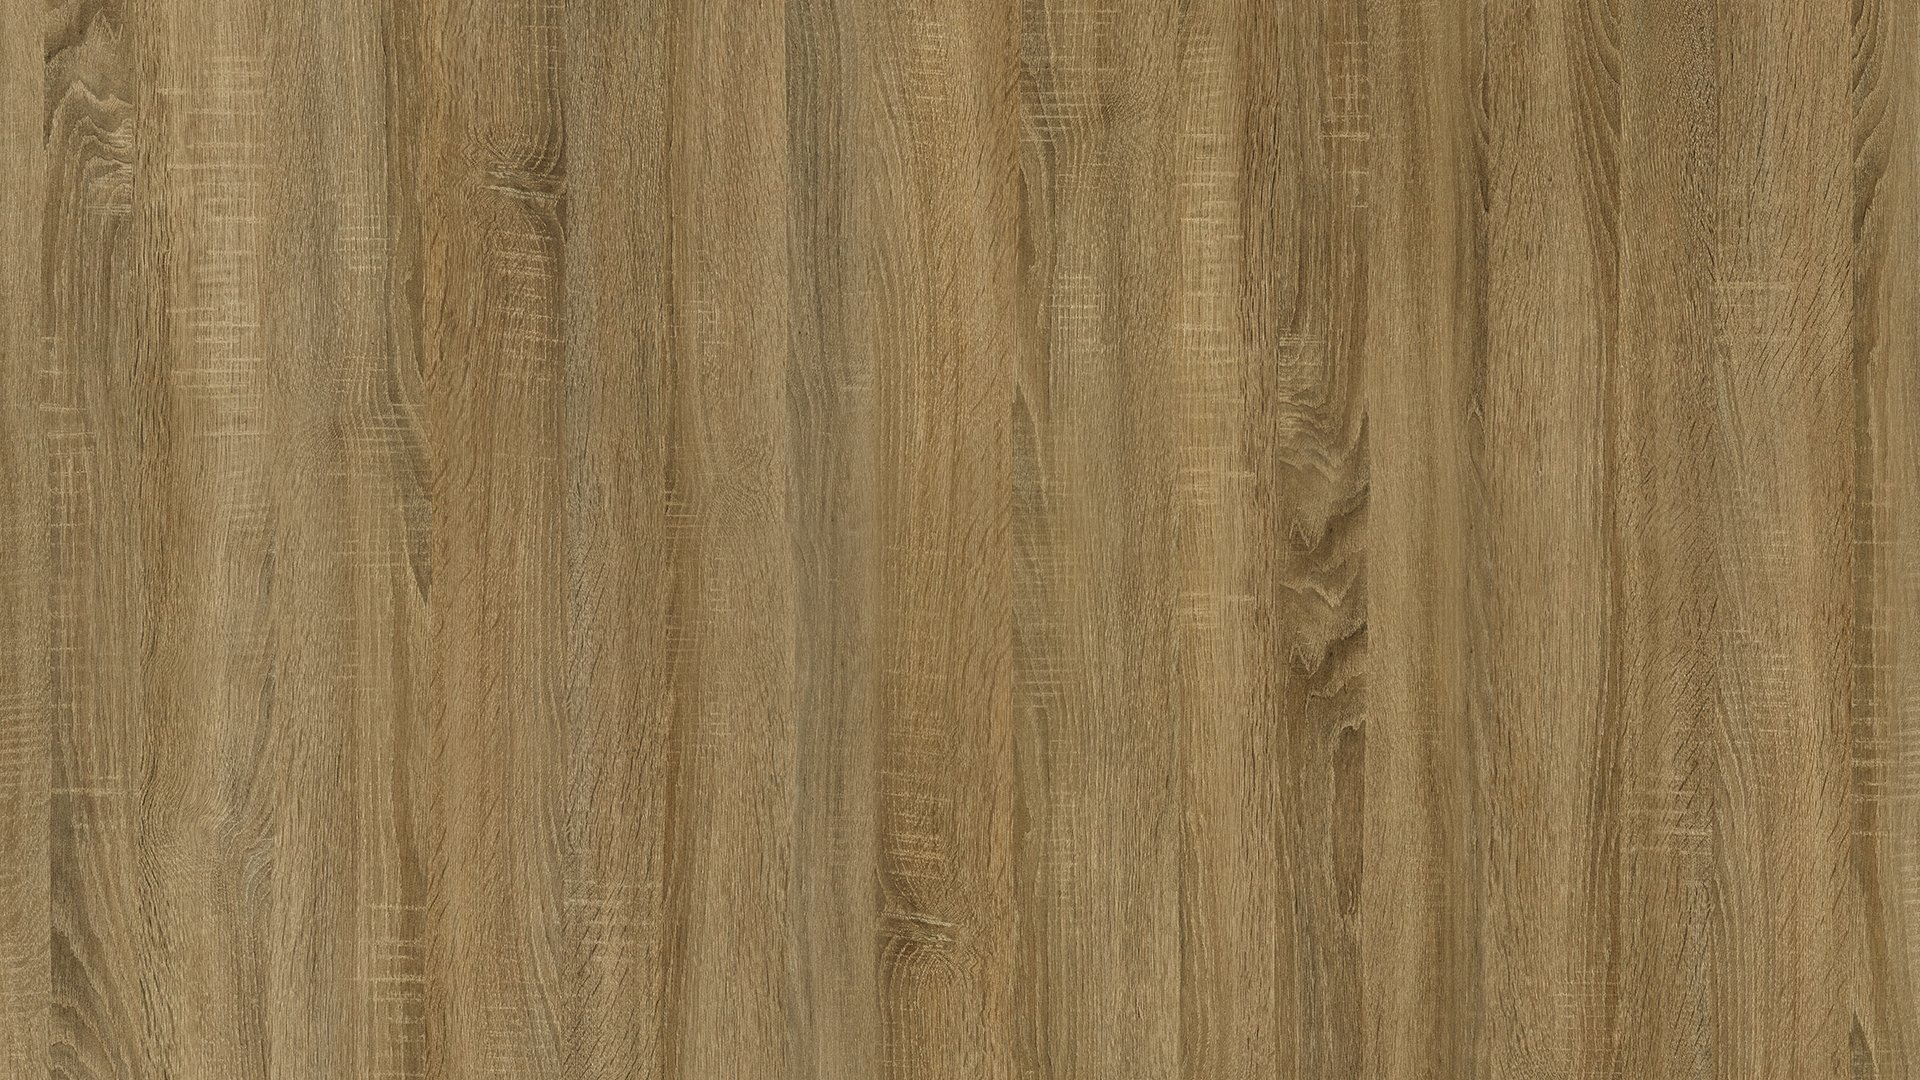 Oak wood texture | FlyingArchitecture